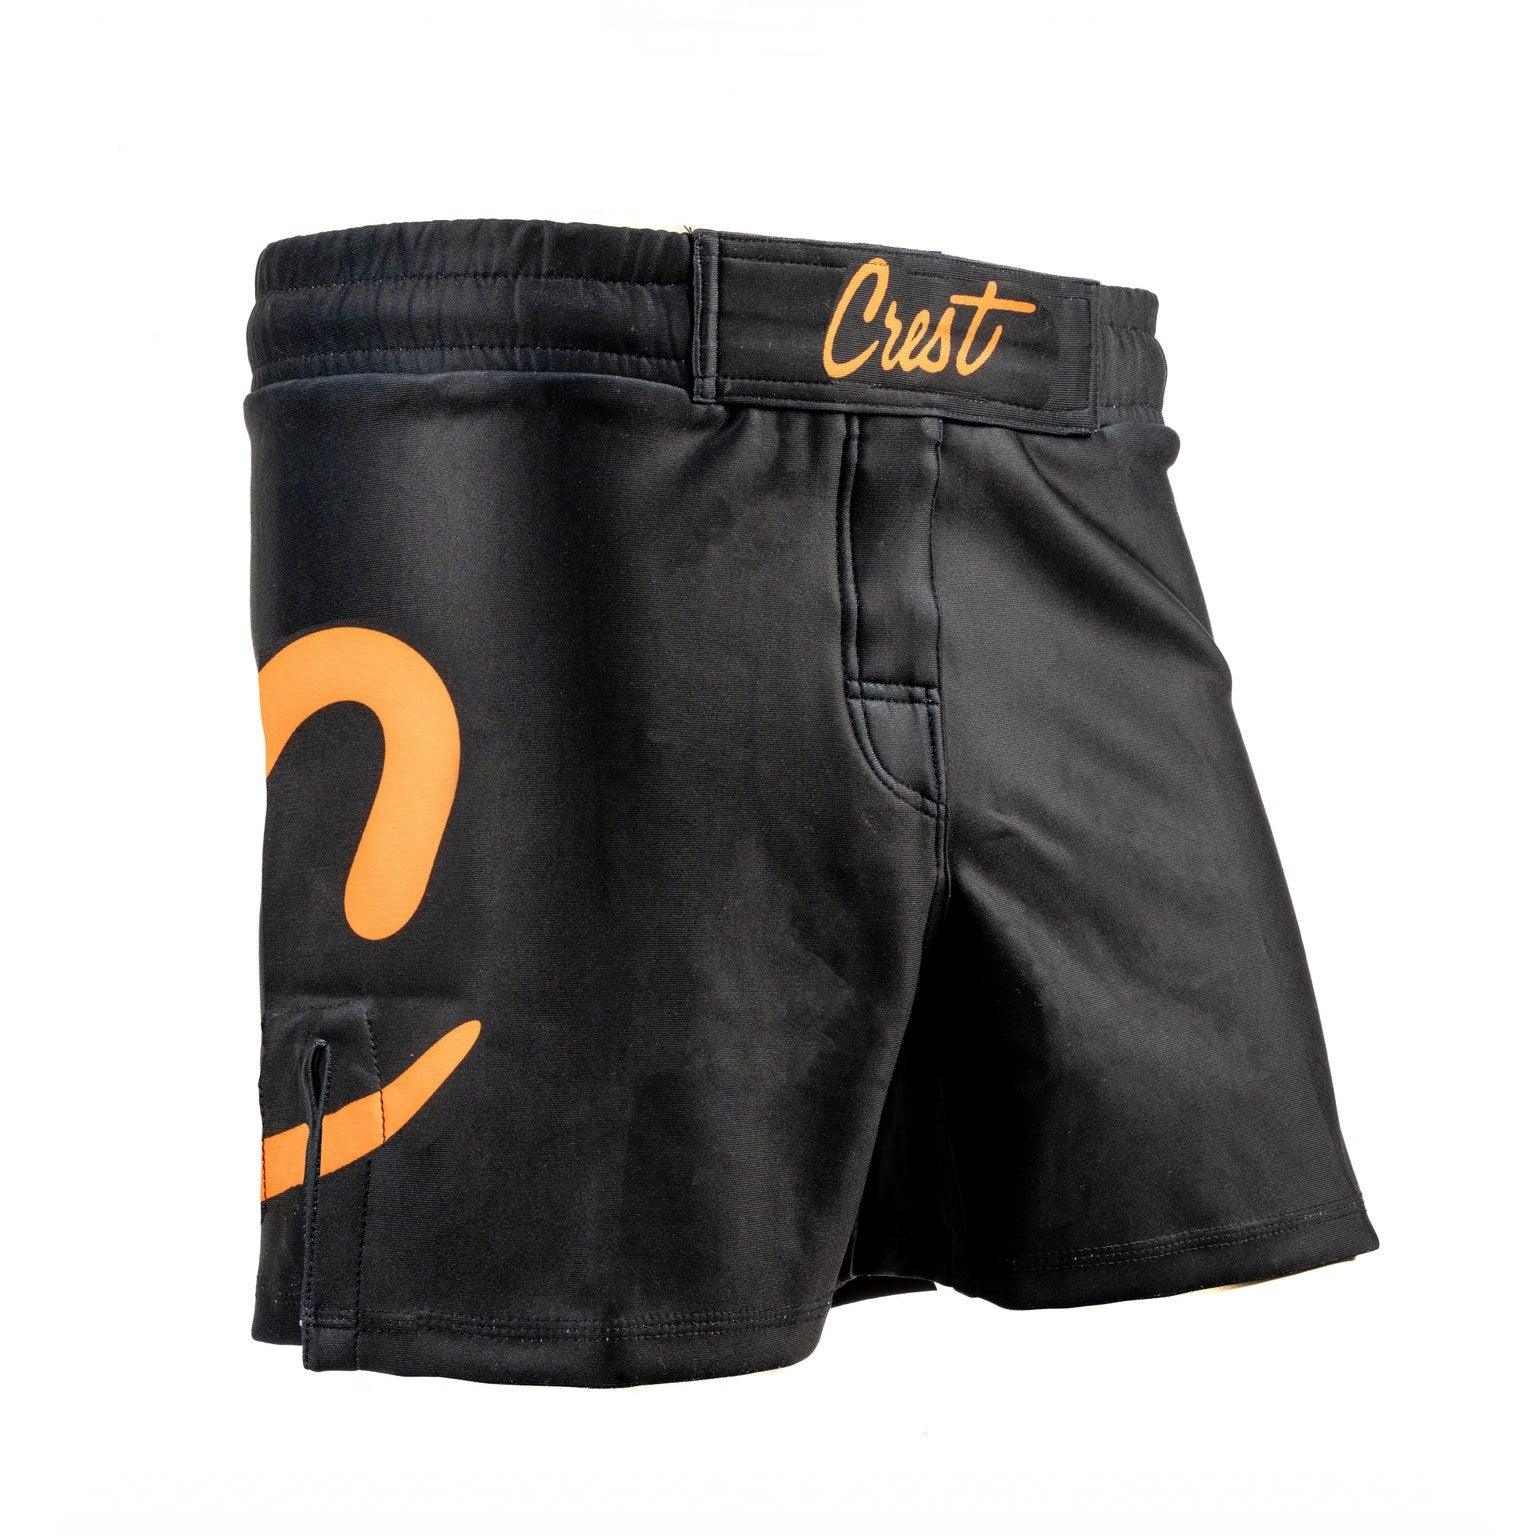 MMA shorts - Crest - PFG